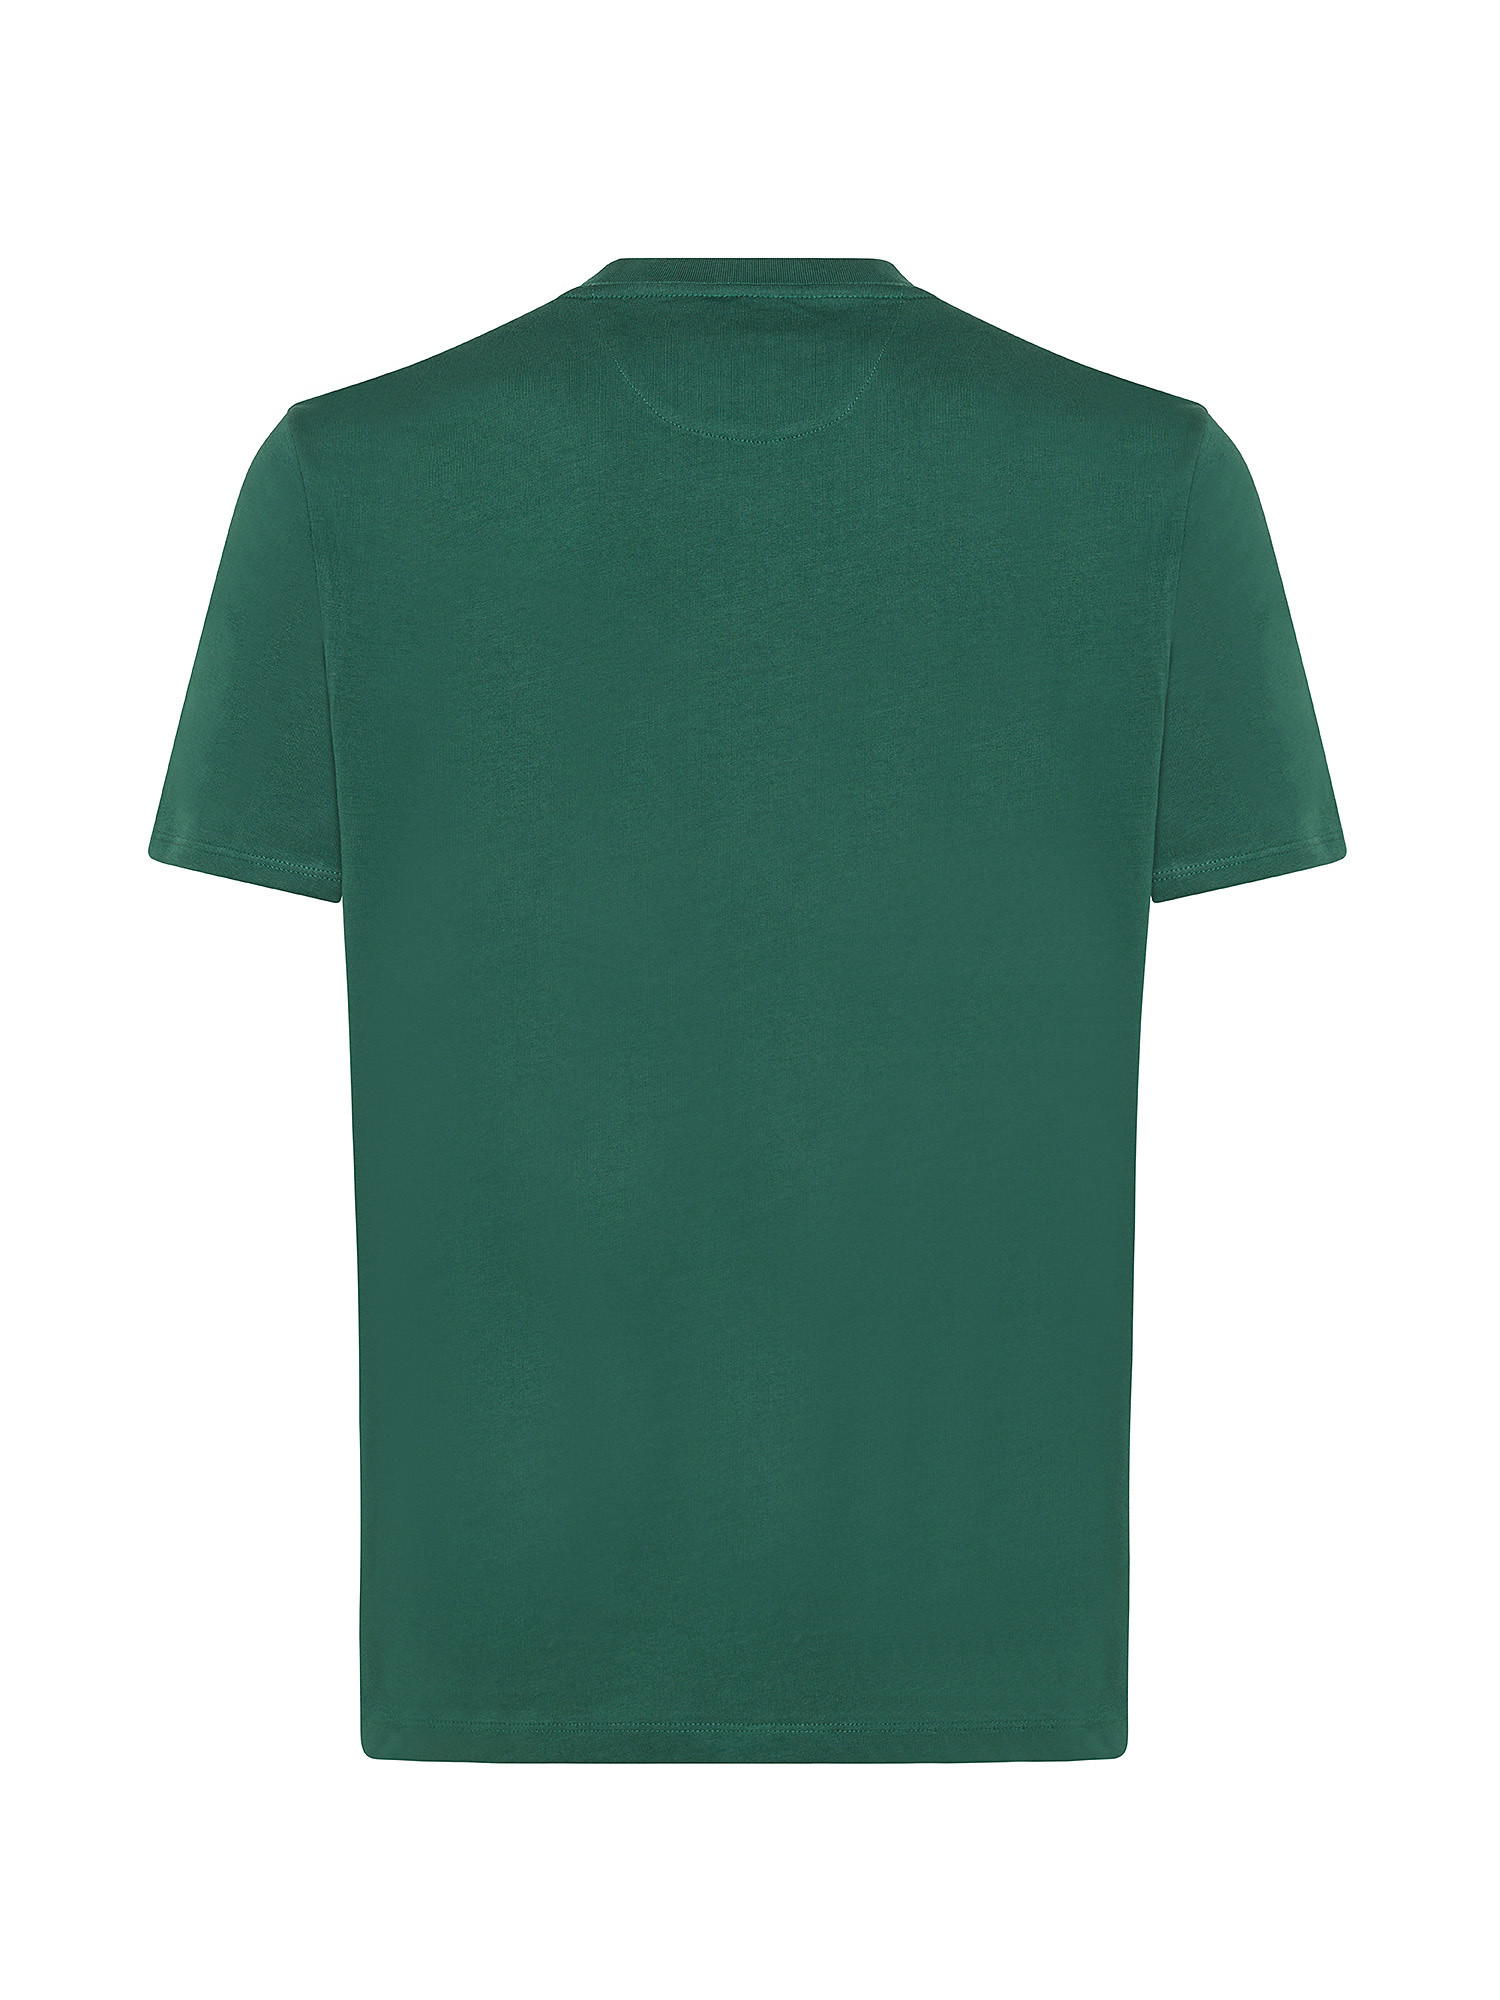 JCT - Pure supima cotton T-shirt, Dark Green, large image number 1